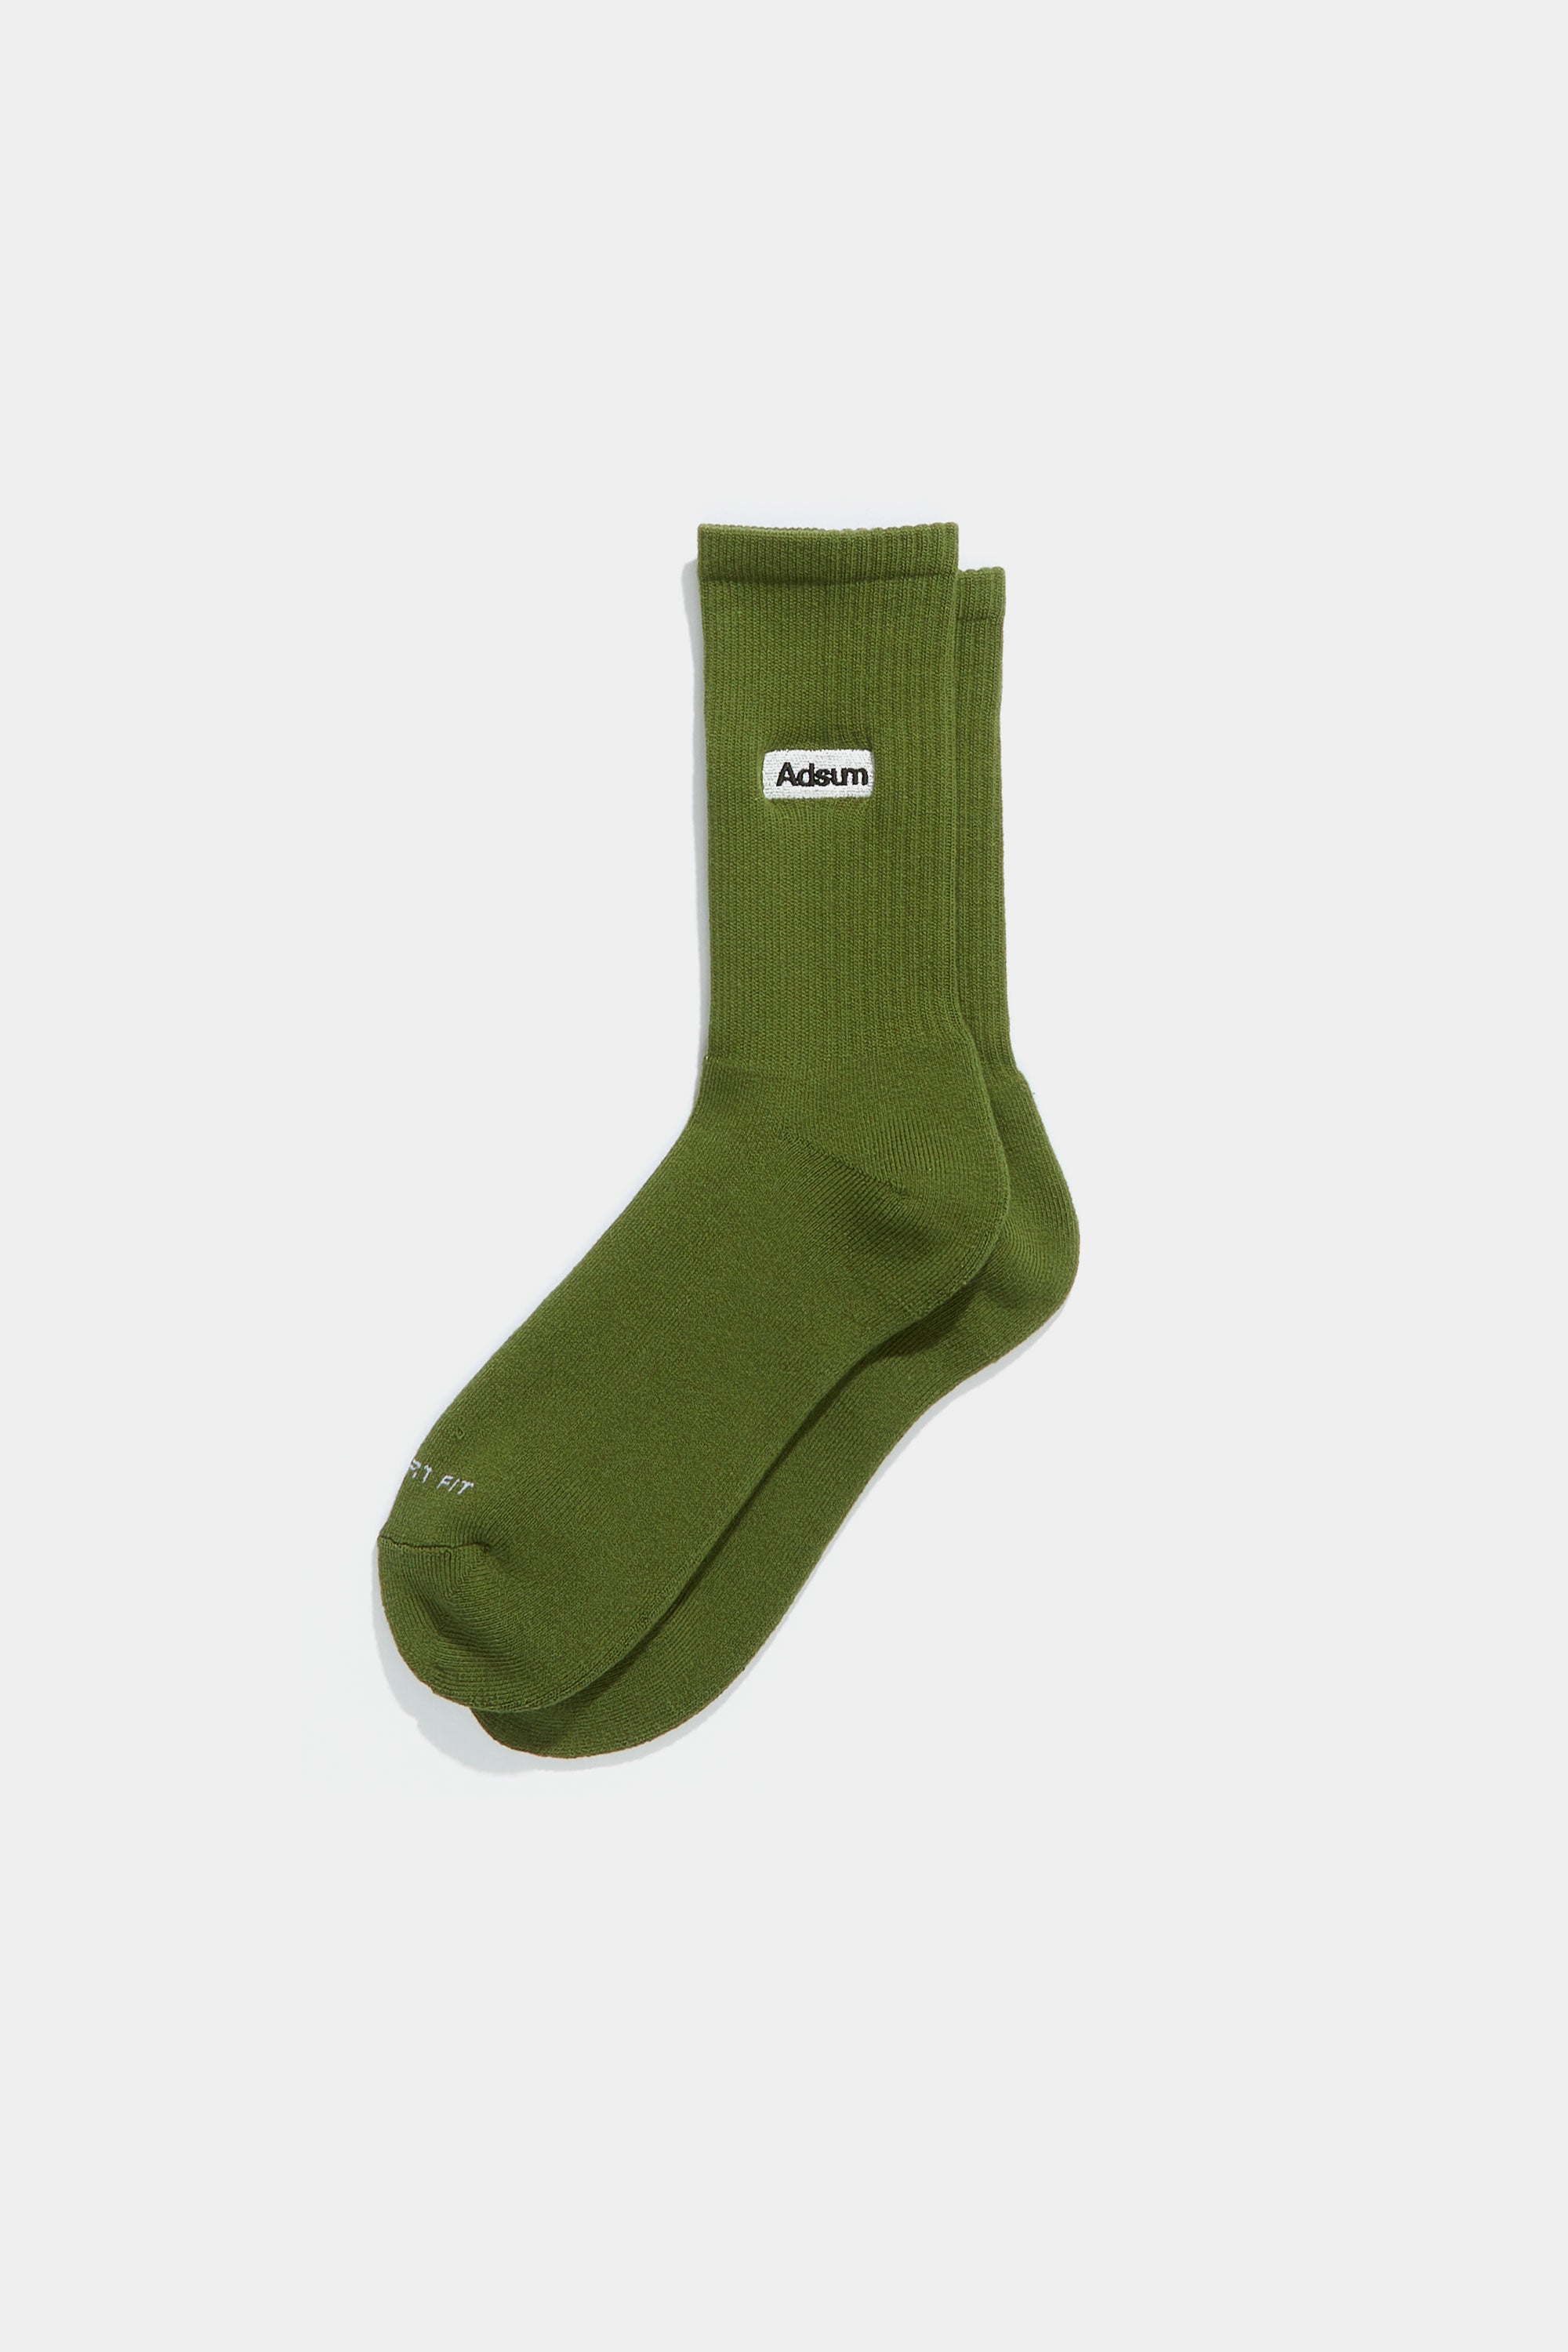 Classic Comfort Sock - Light / White / Adsum